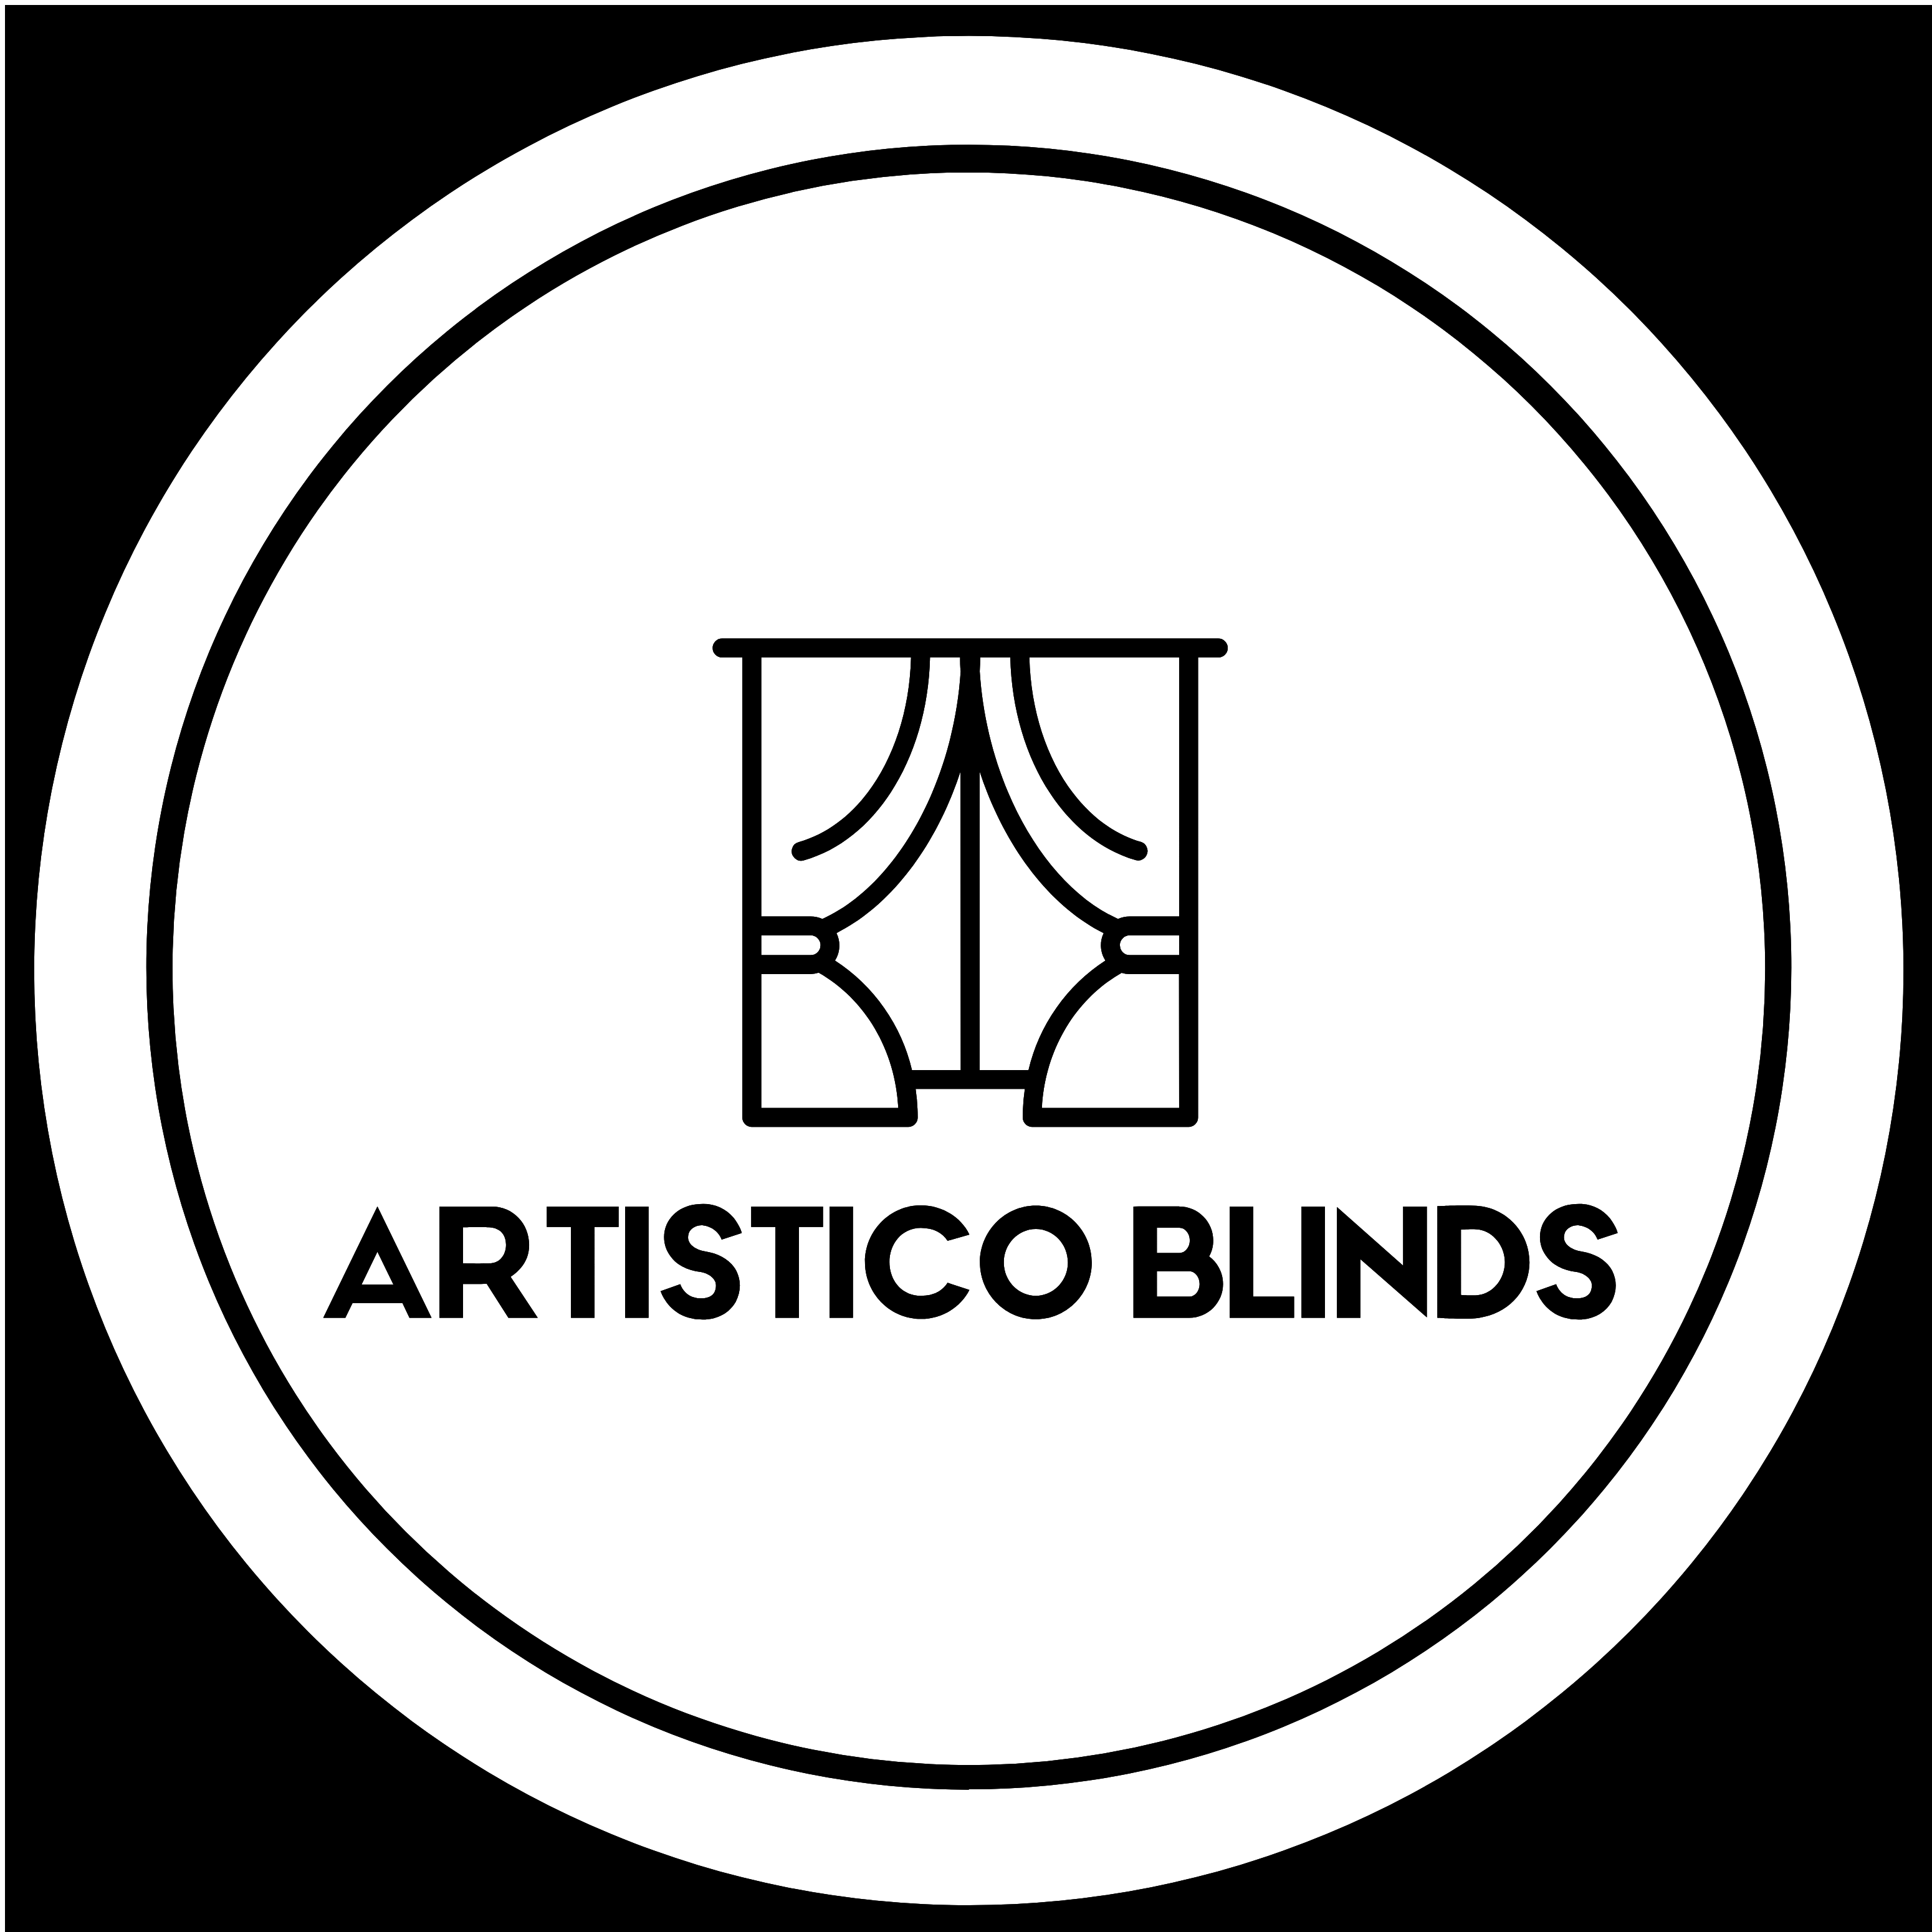 Artistico Blinds Ltd.'s logo